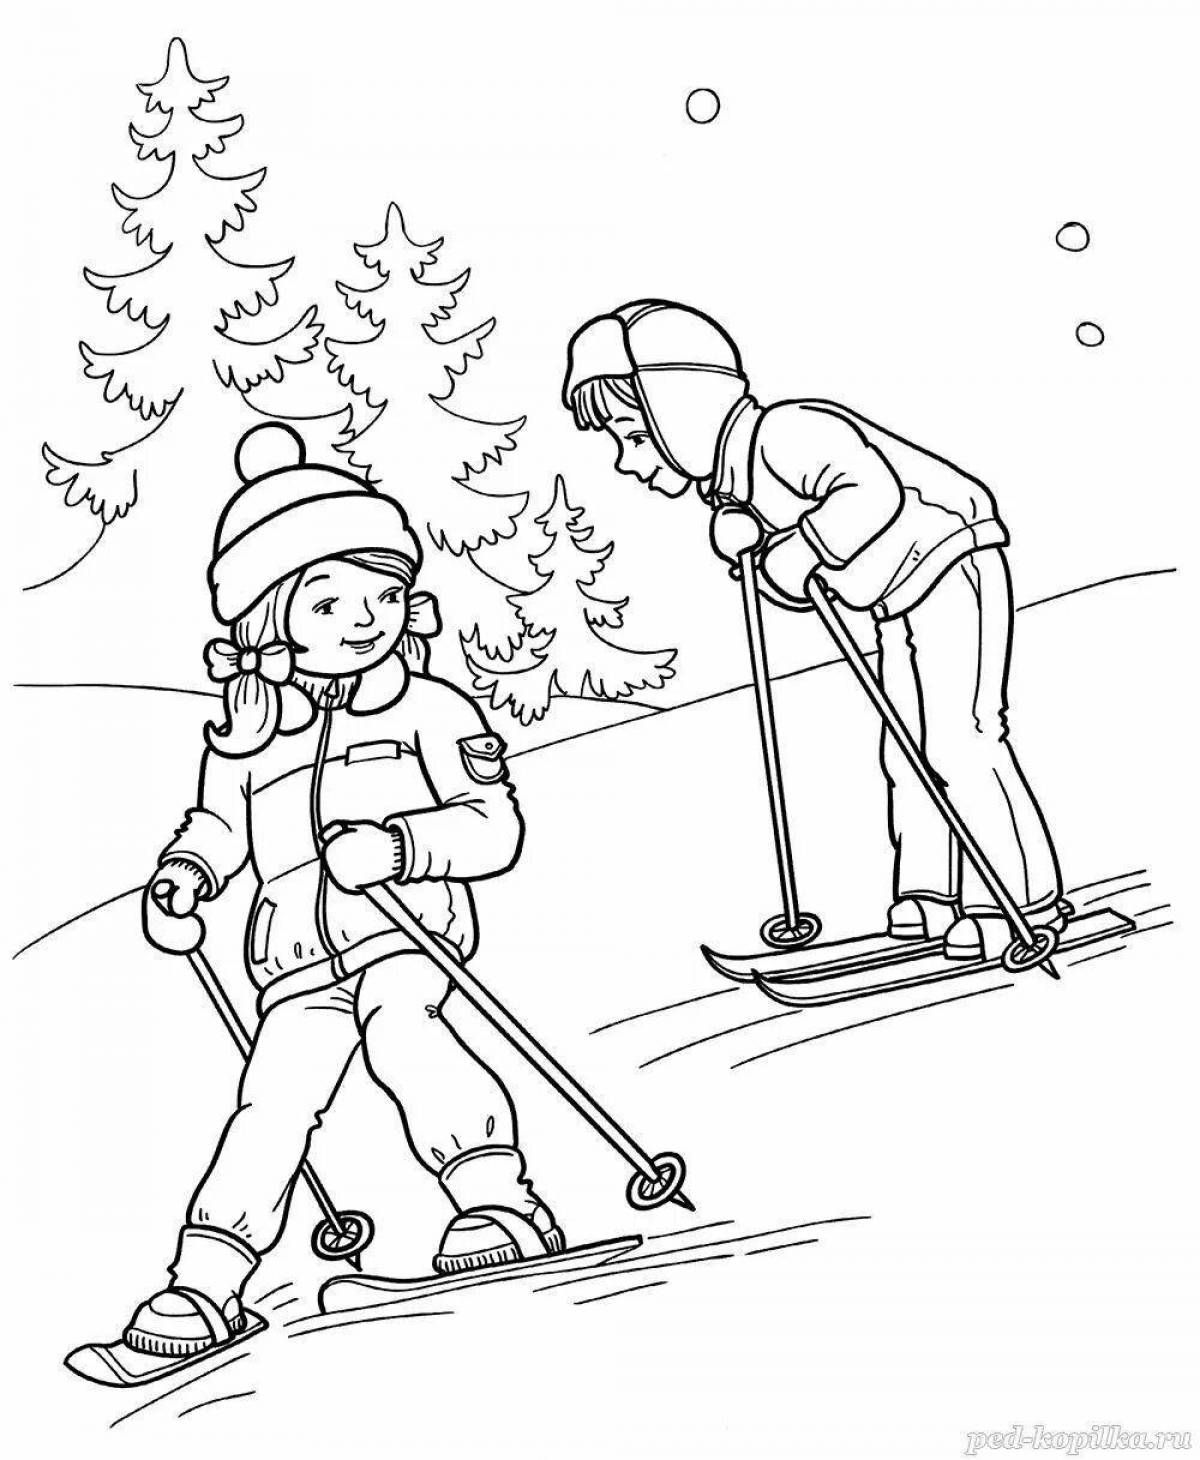 Joyful family skiing coloring book